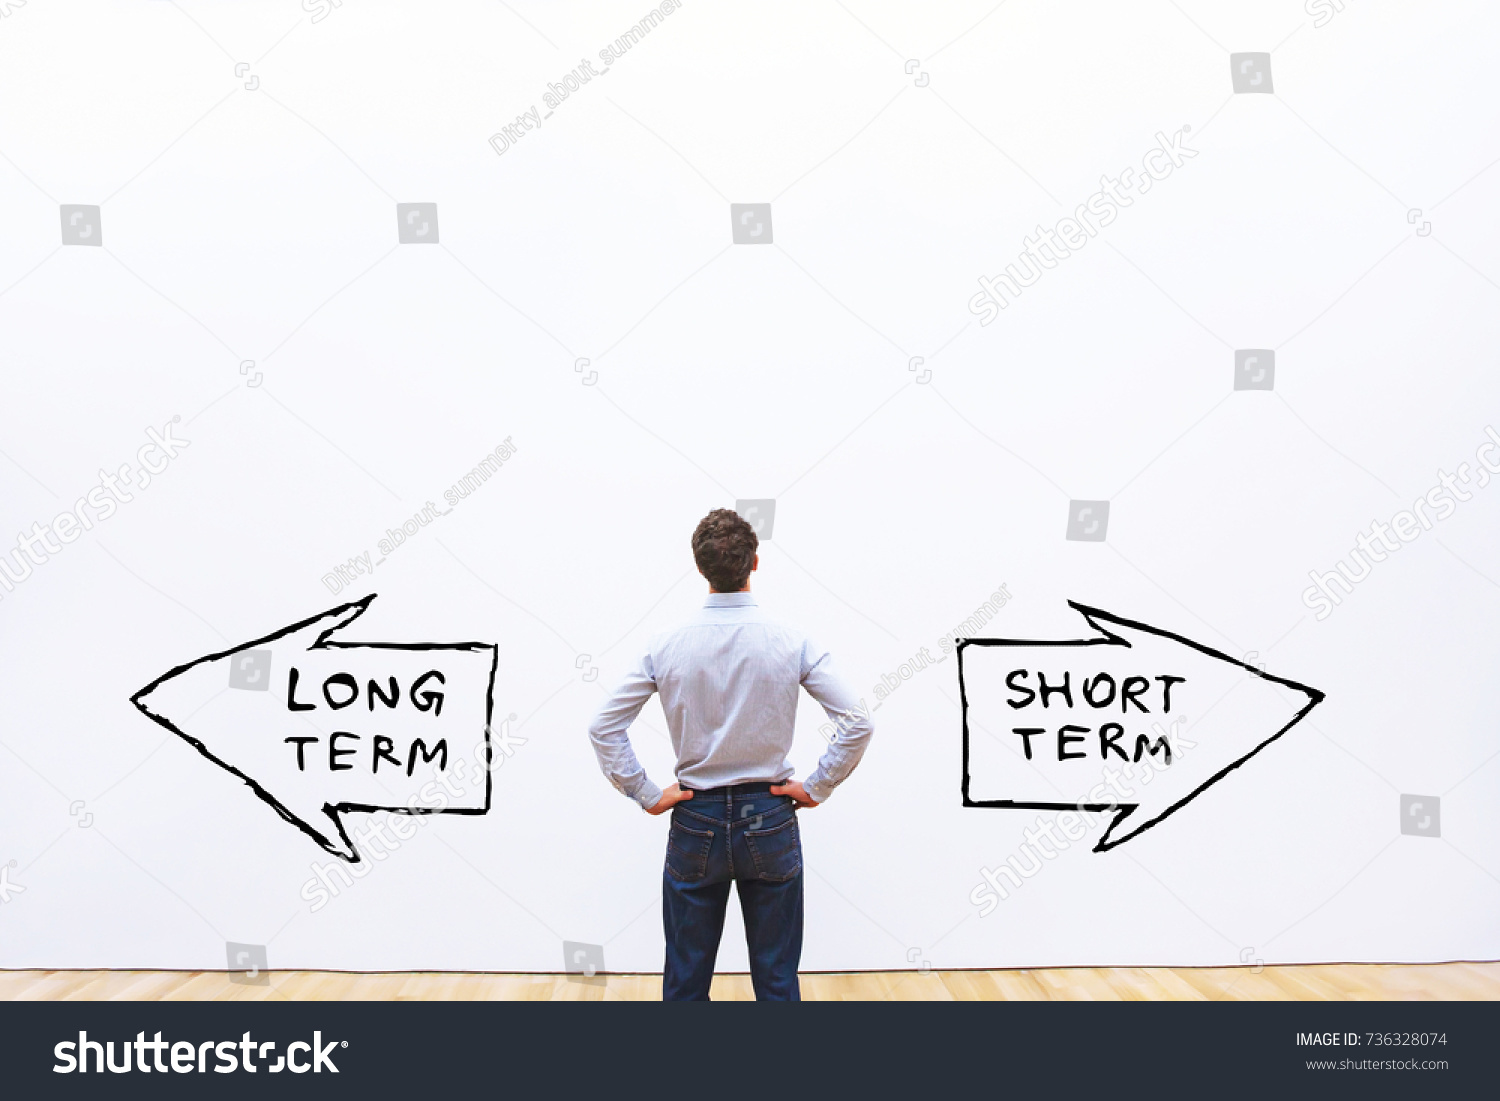 long term vs short term concept #736328074